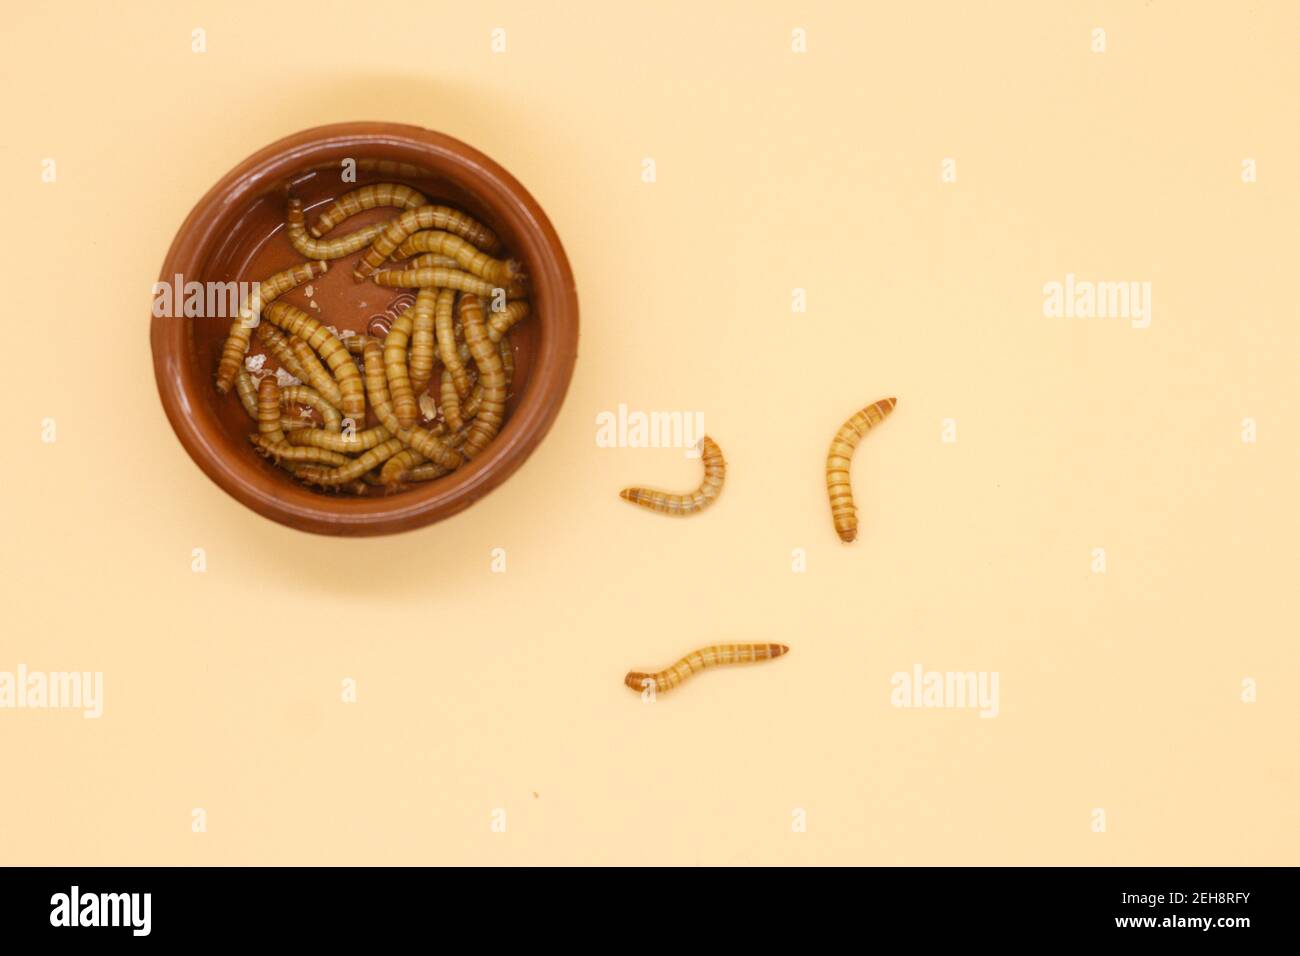 mealworms or tenebrio molitor for human consumption entomophogy Stock Photo